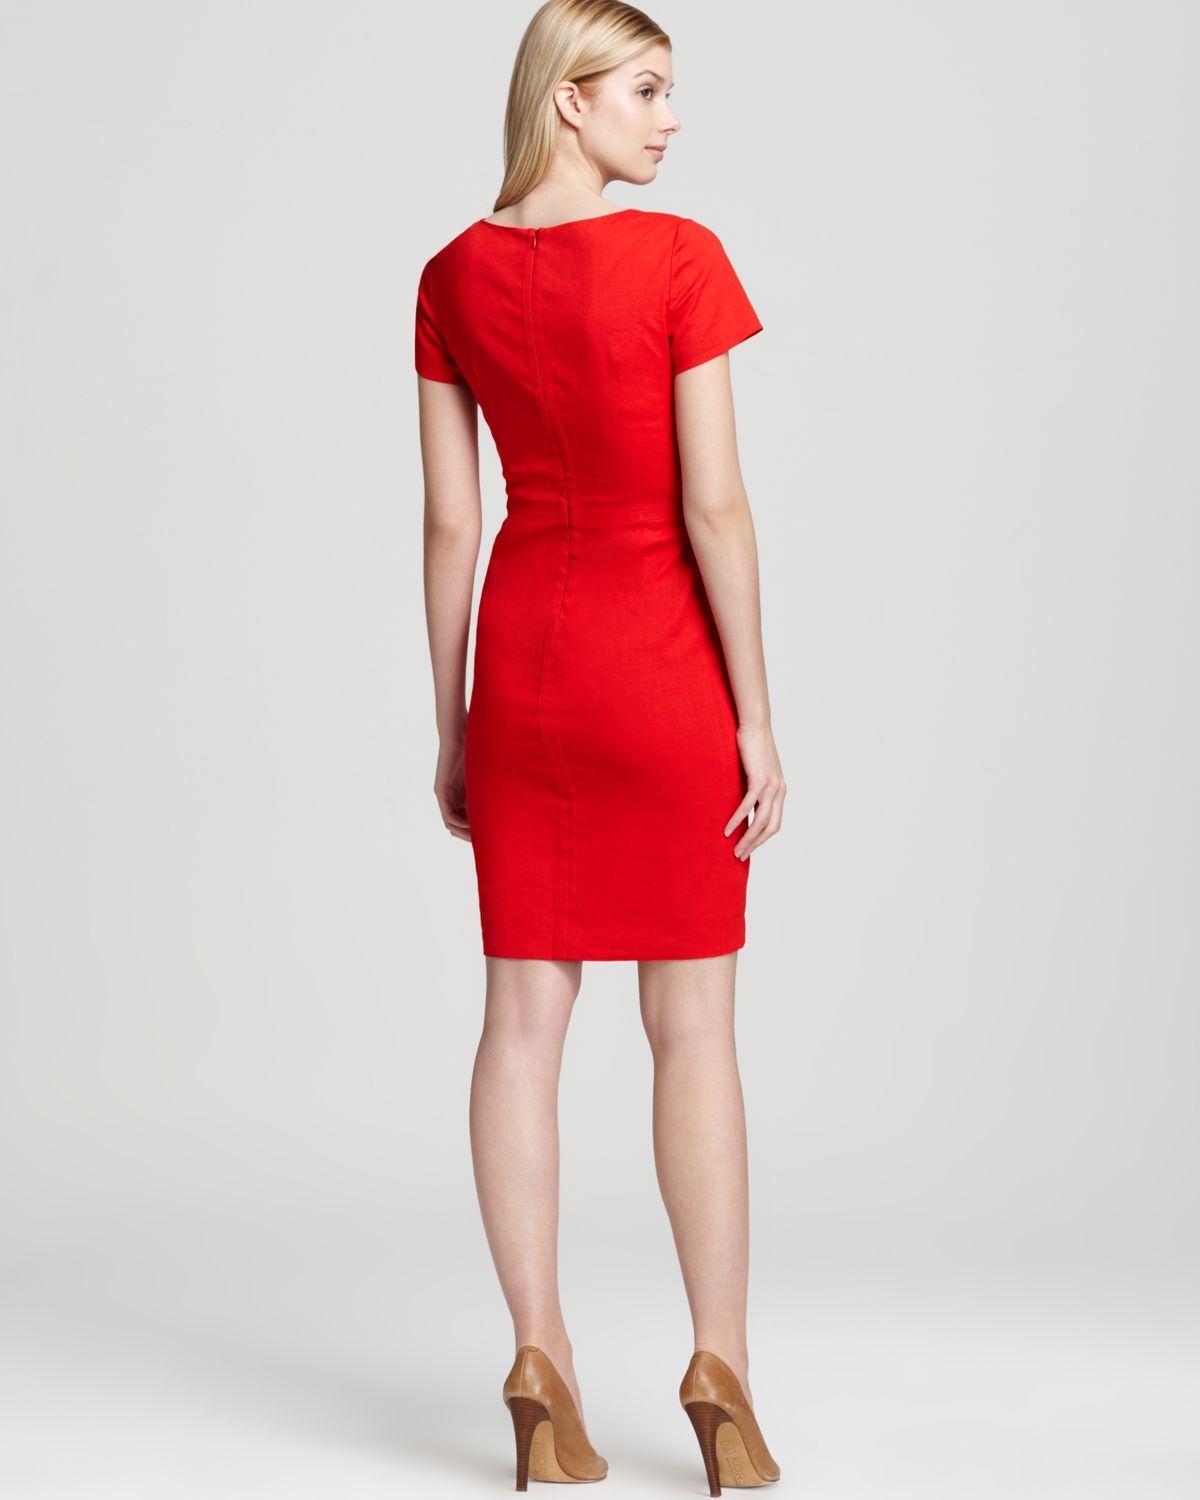 Lyst - Dkny Short Sleeve V Neck Sheath Dress in Red